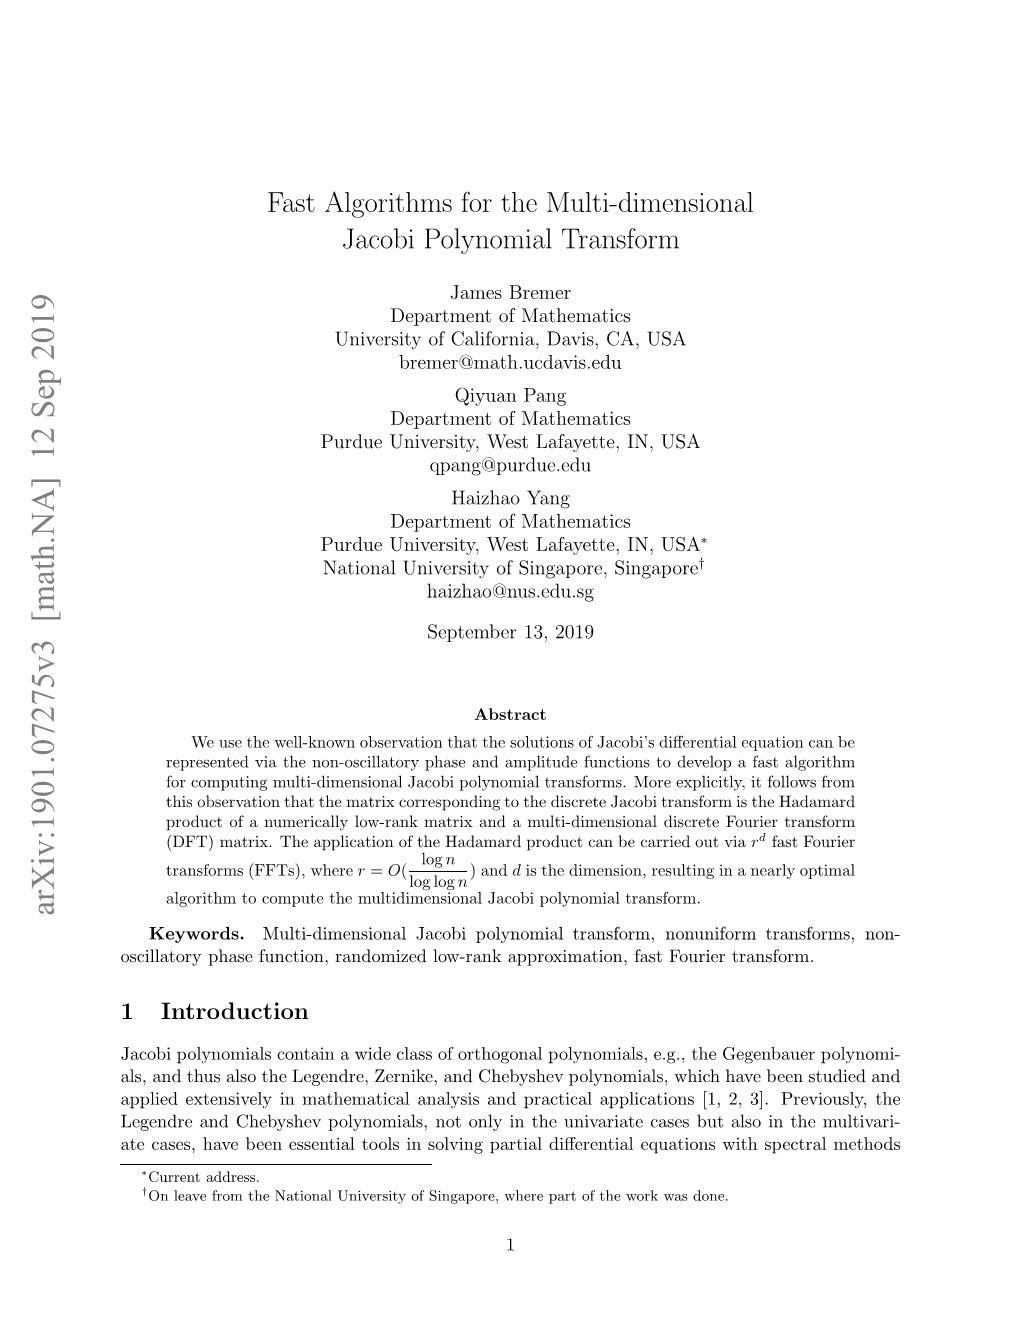 Fast Algorithms for the Multi-Dimensional Jacobi